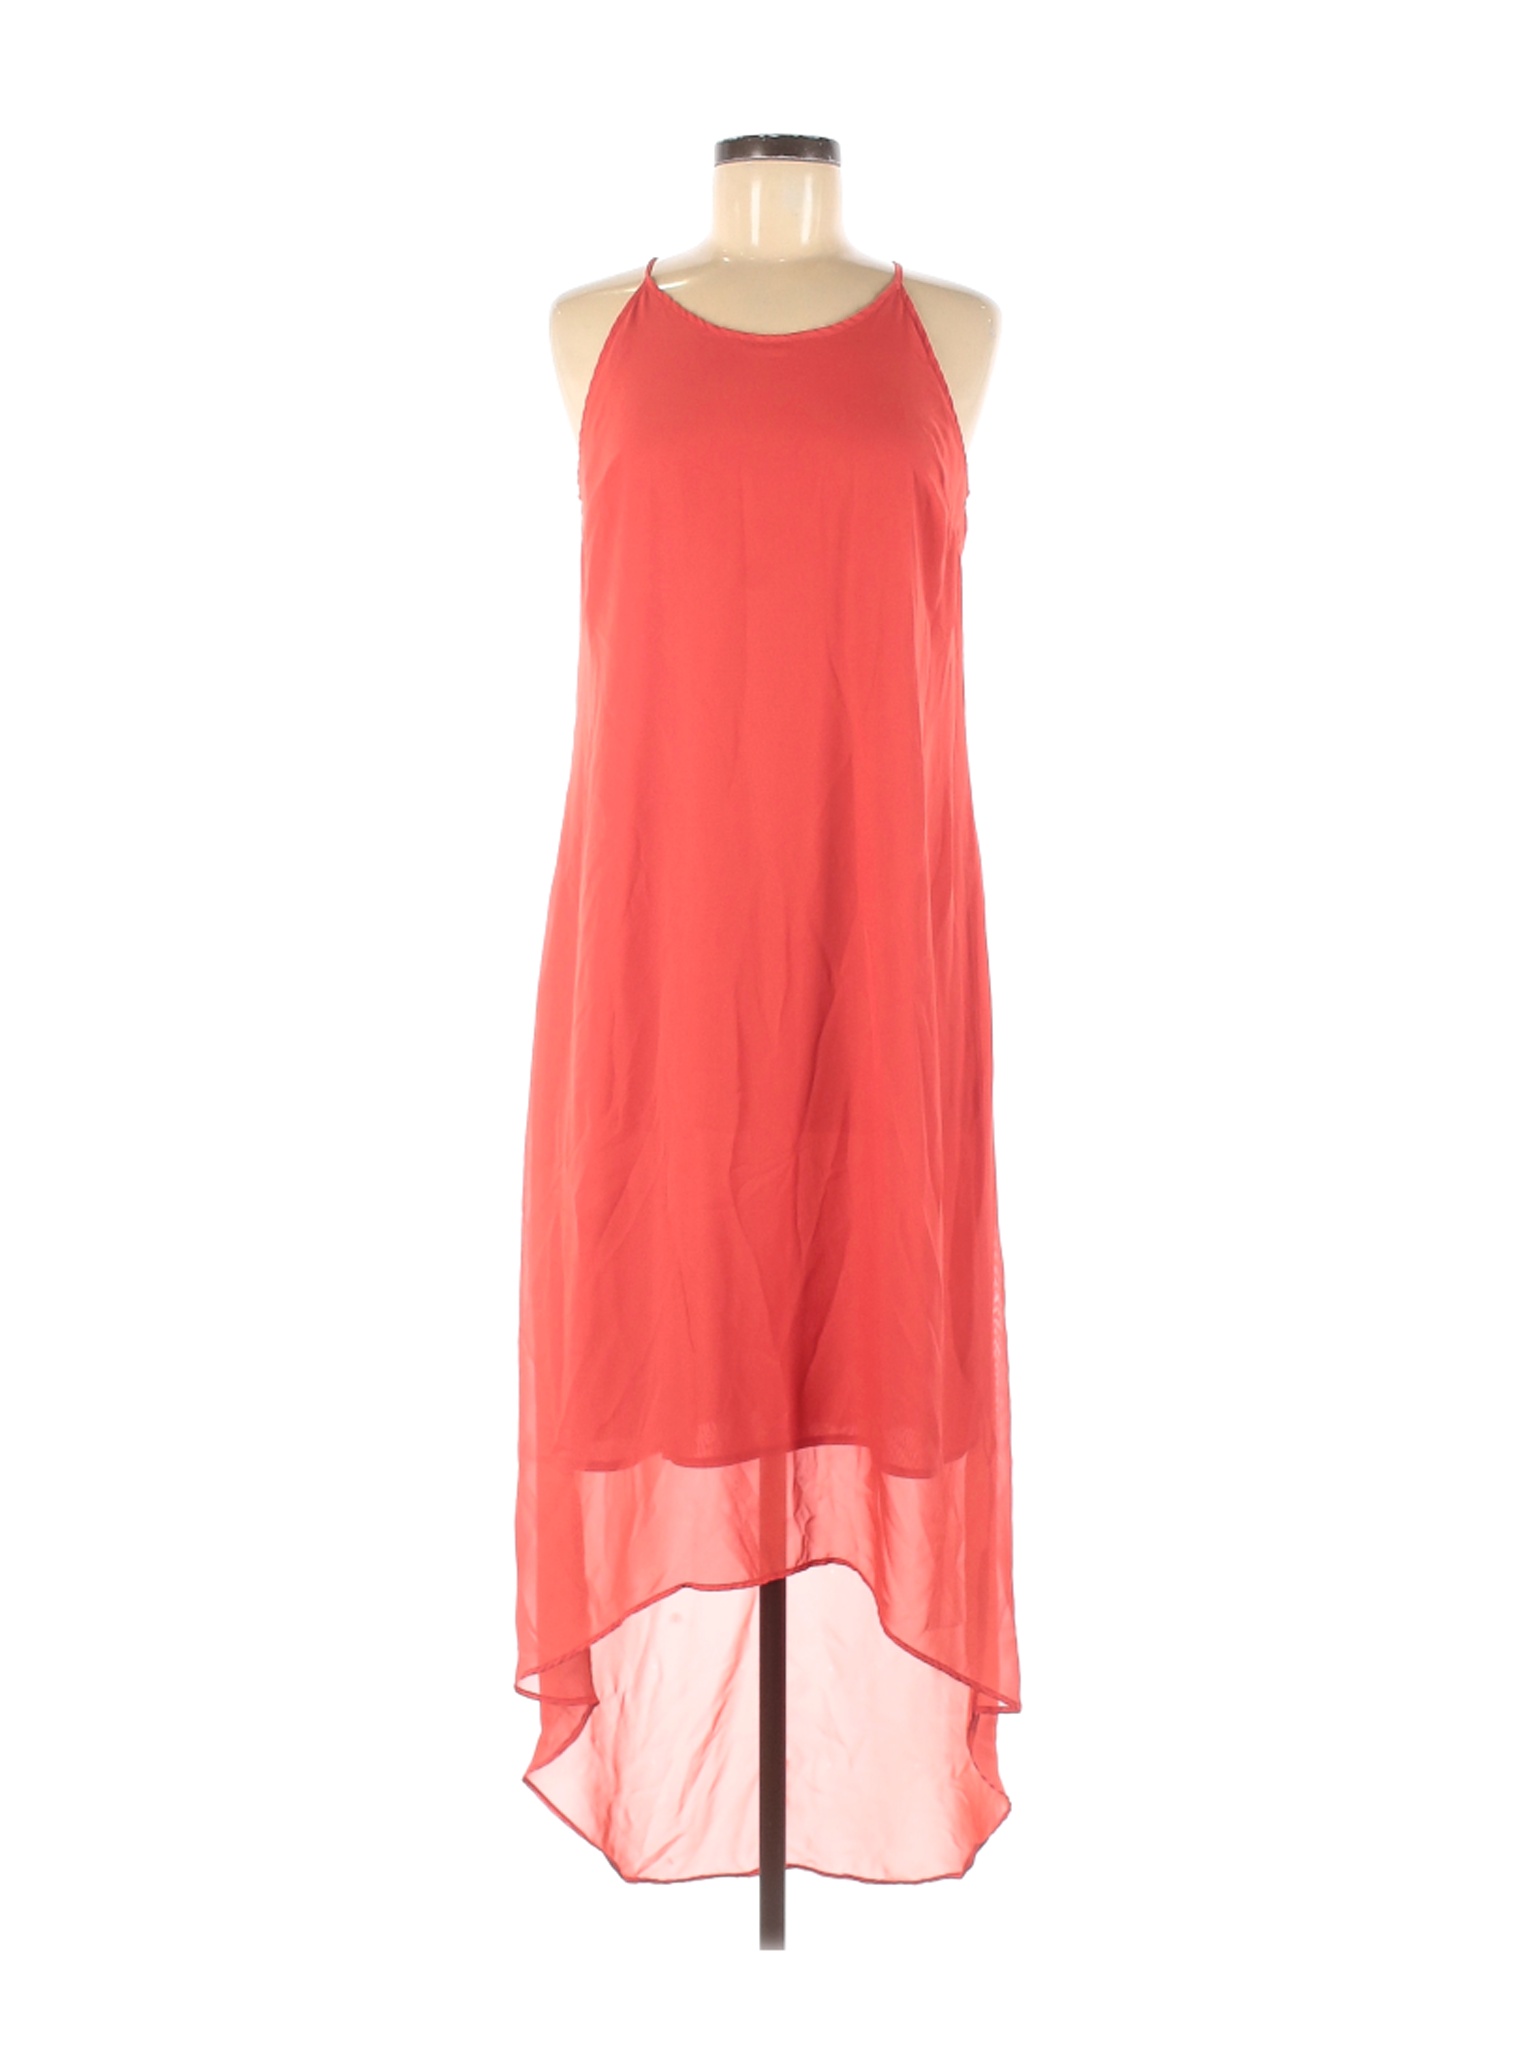 Old Navy Women Pink Casual Dress M | eBay